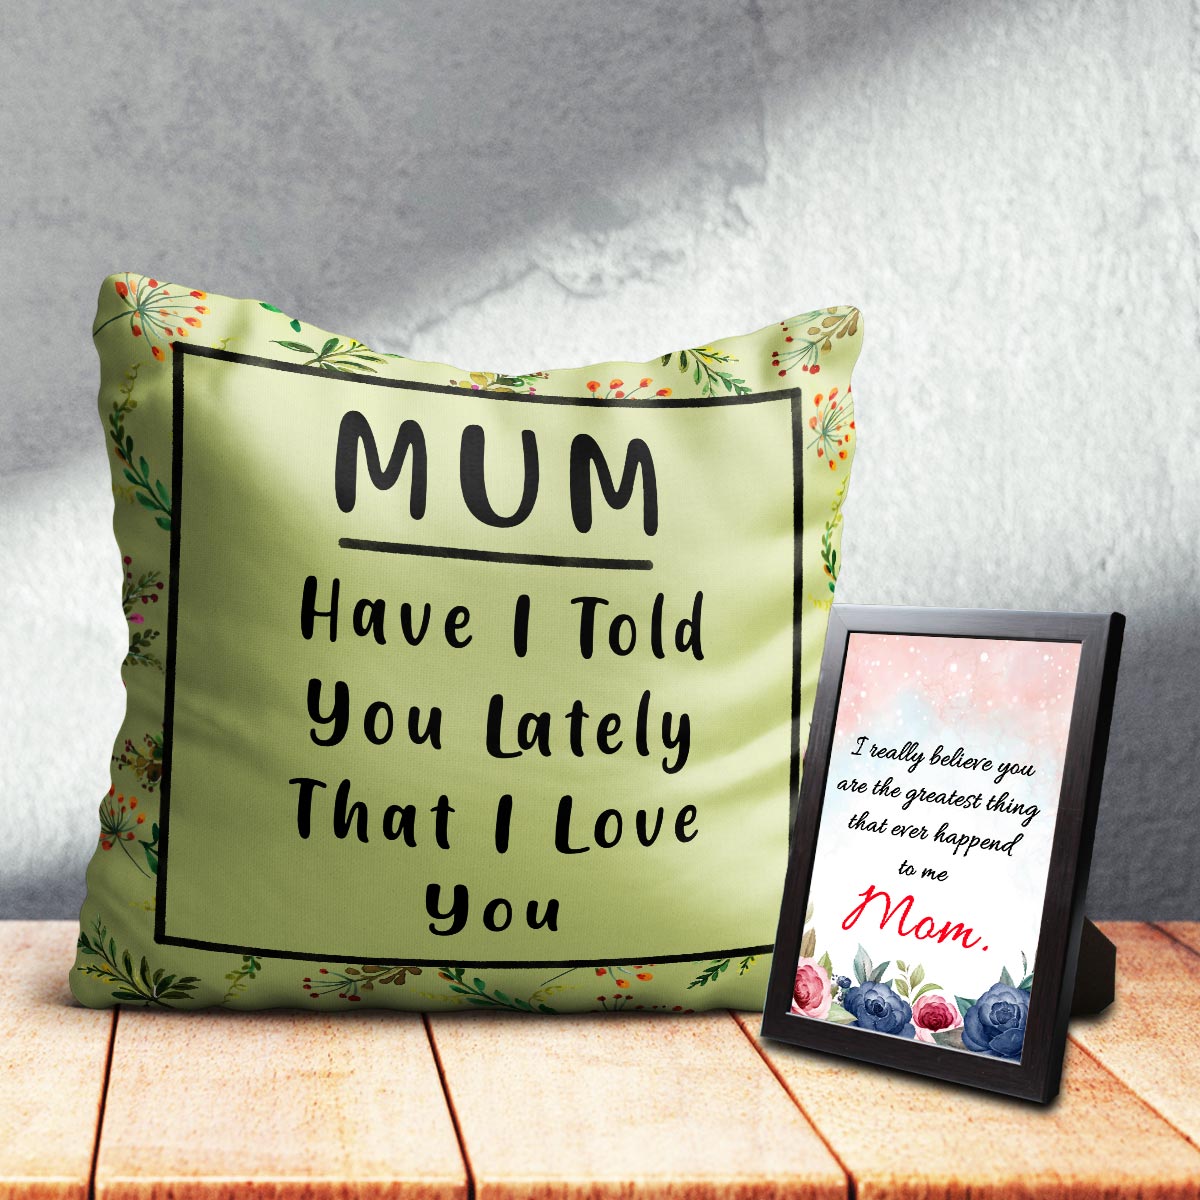 Charming Cushion & Photo Frame for Mom